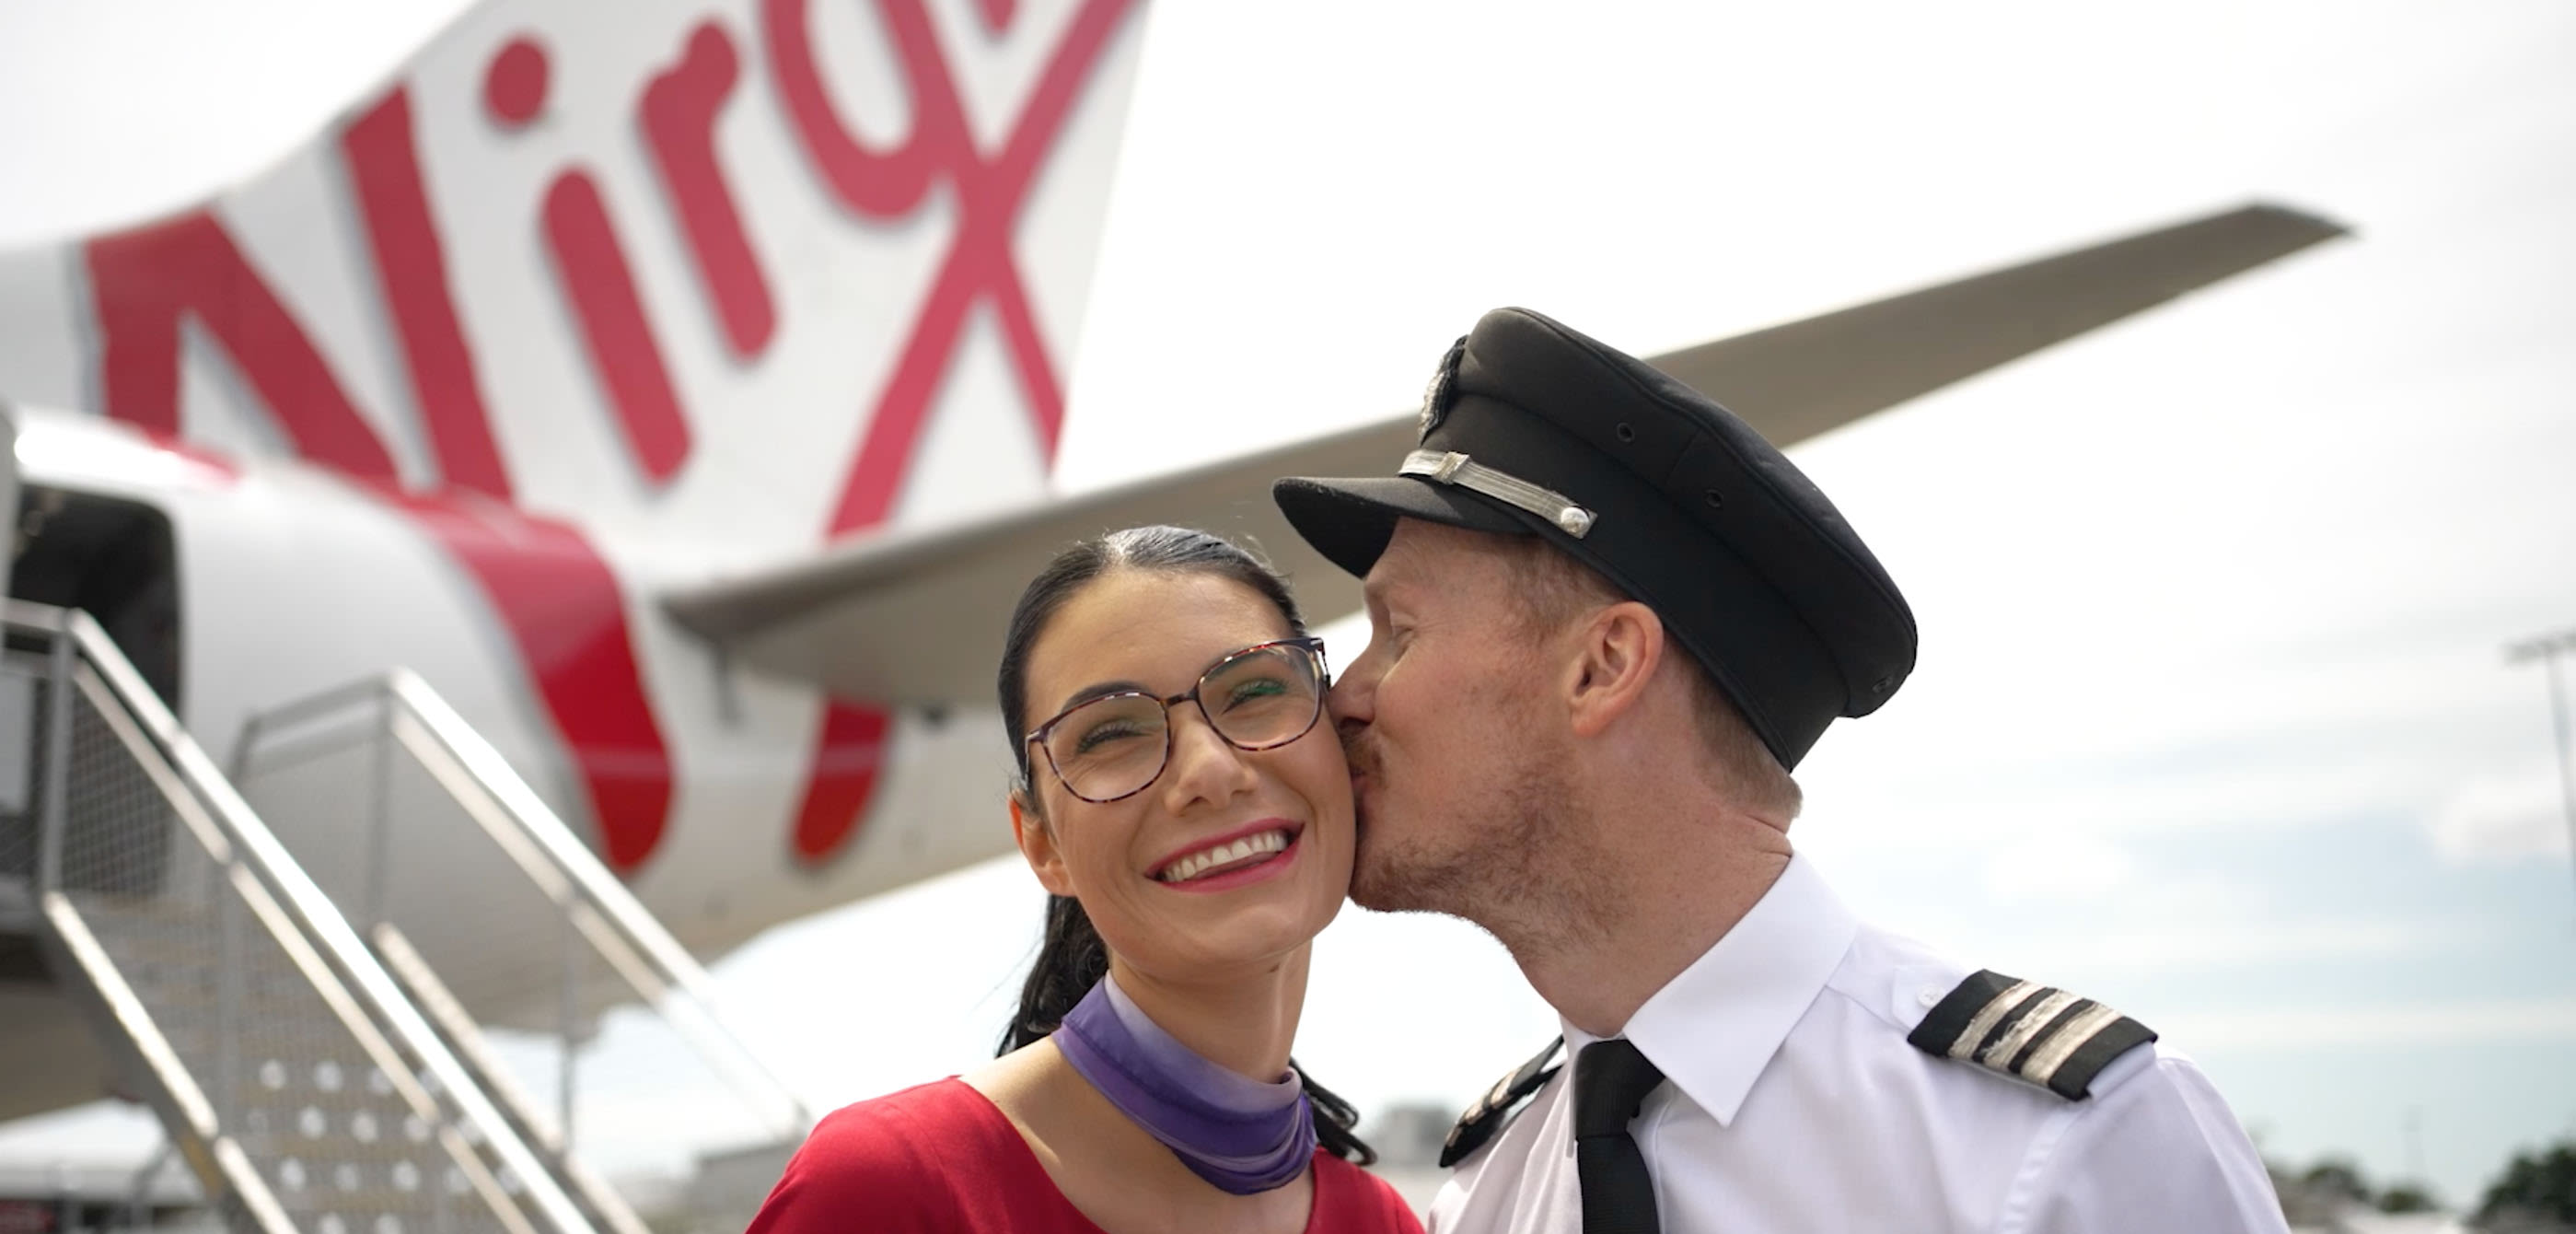 A Virgin Australia pilot kisses his cabin crew partner on her cheek in front of a Virgin Australia aircraft